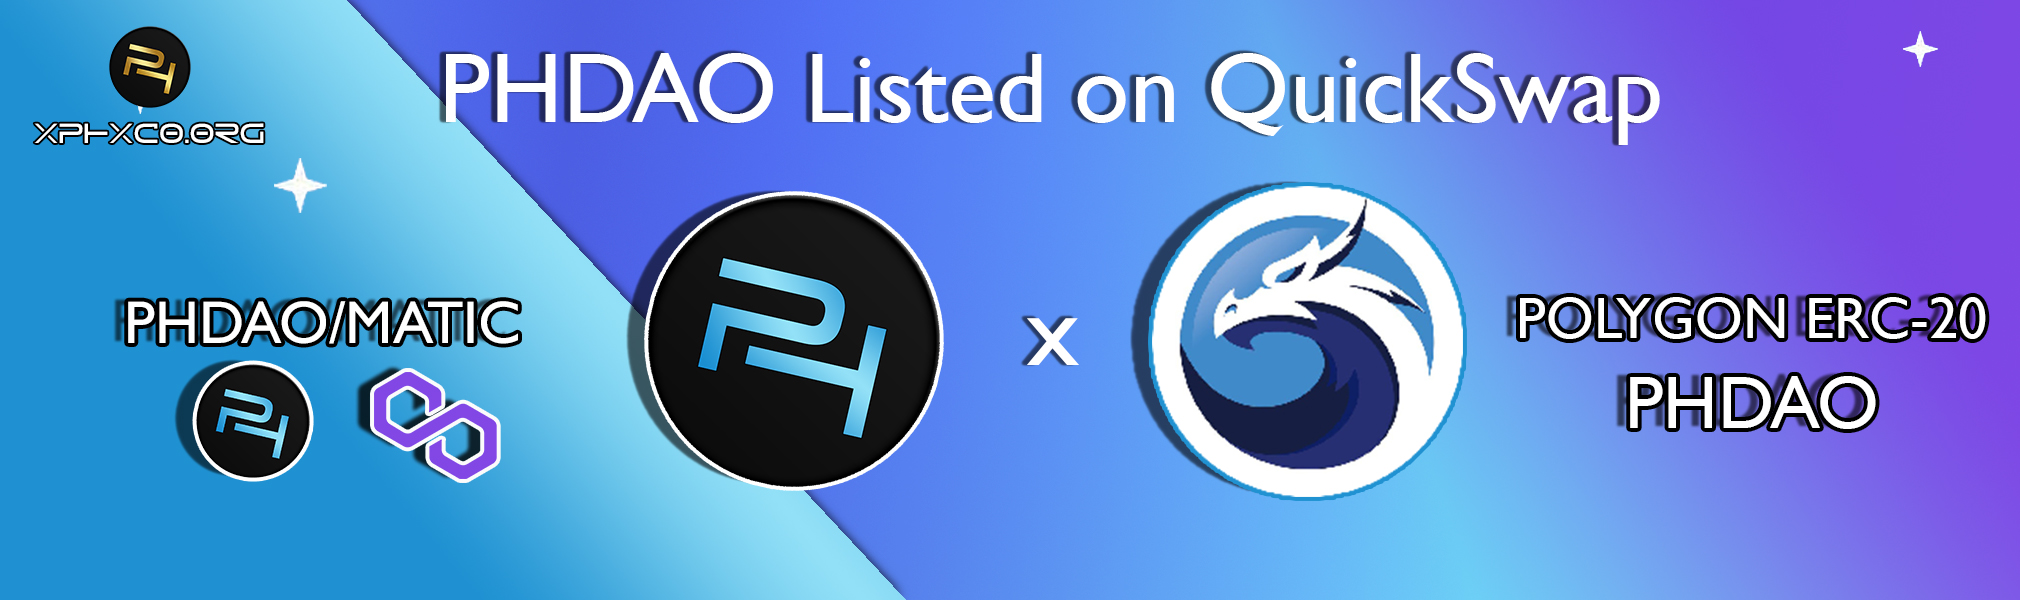 PHDAO listed on quickswap